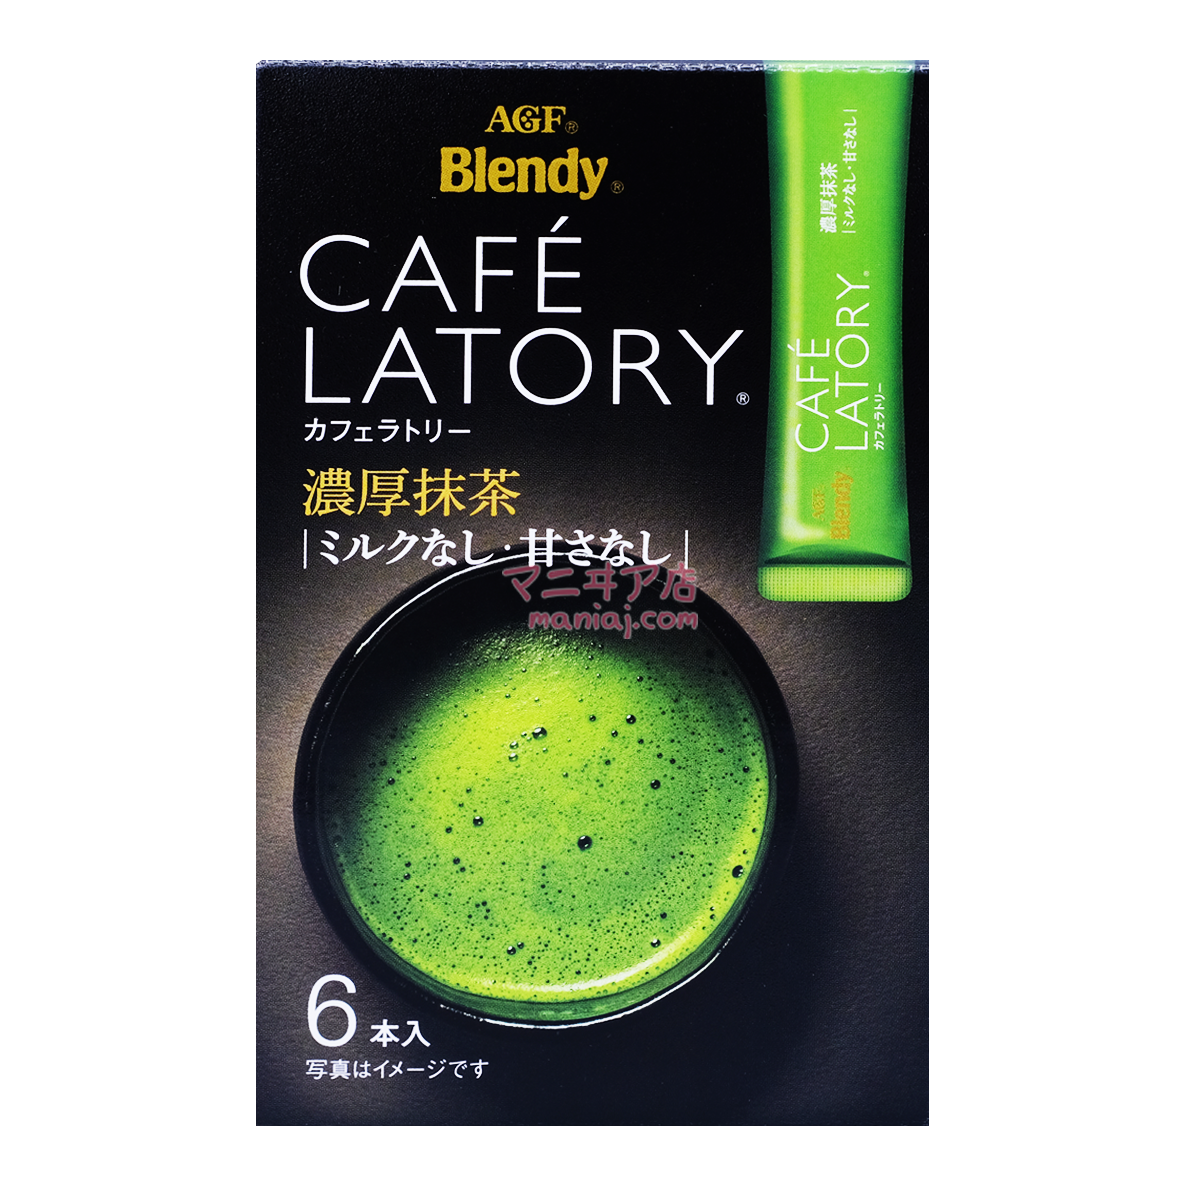 Café Latory濃厚抹茶